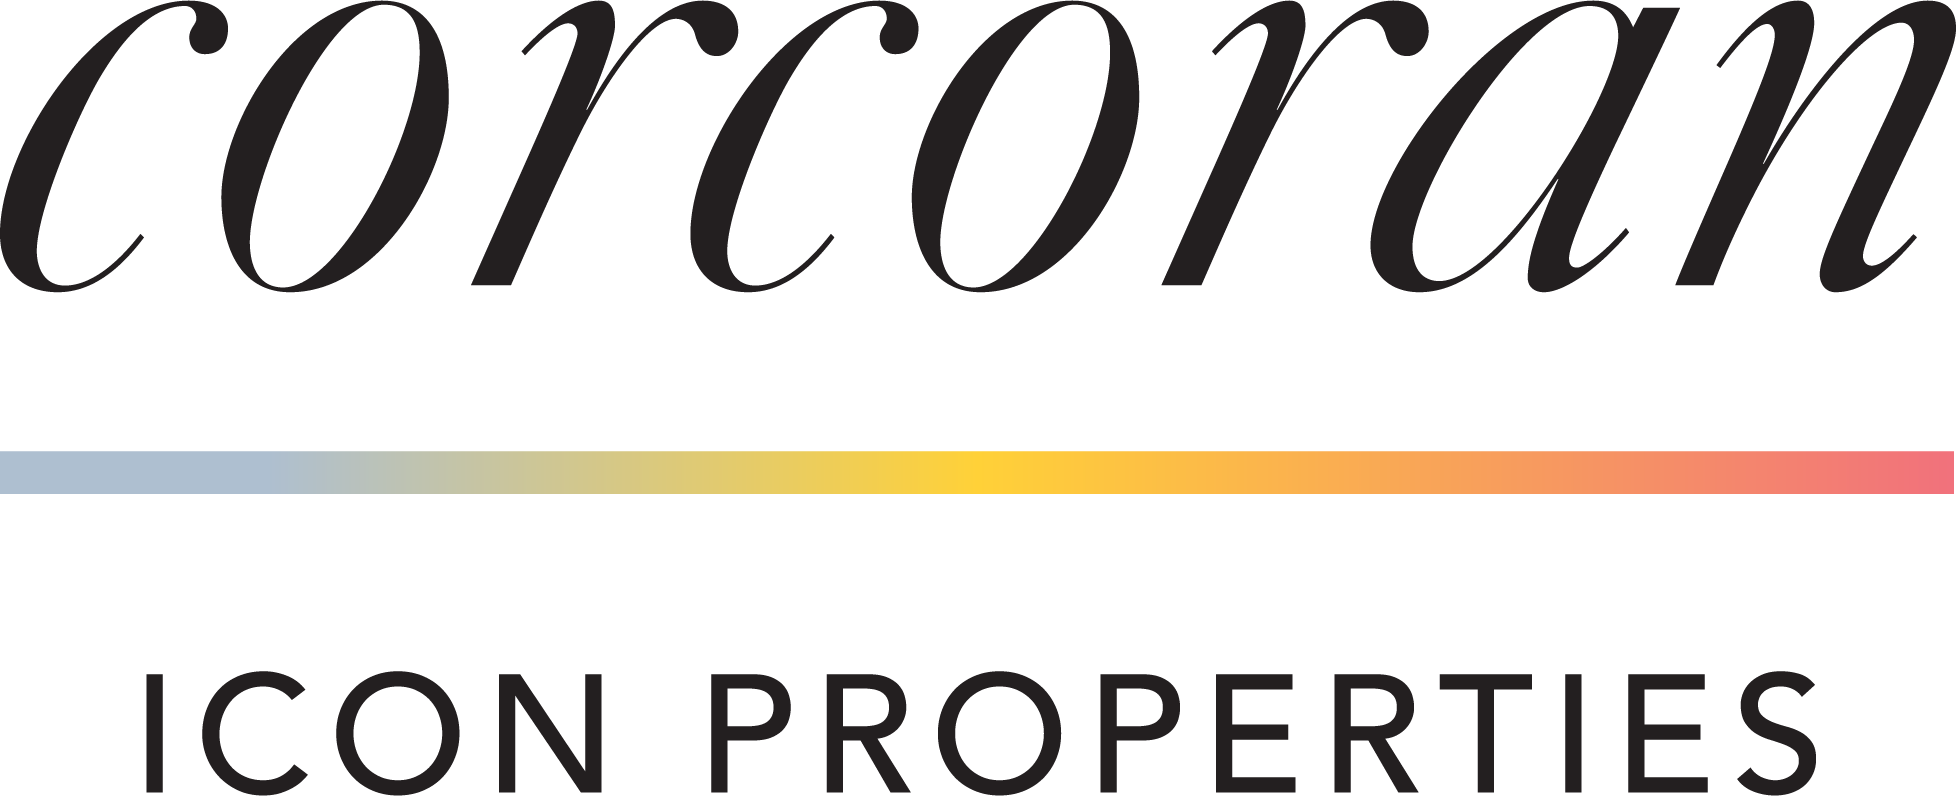 Corcoran Icon Properties logo